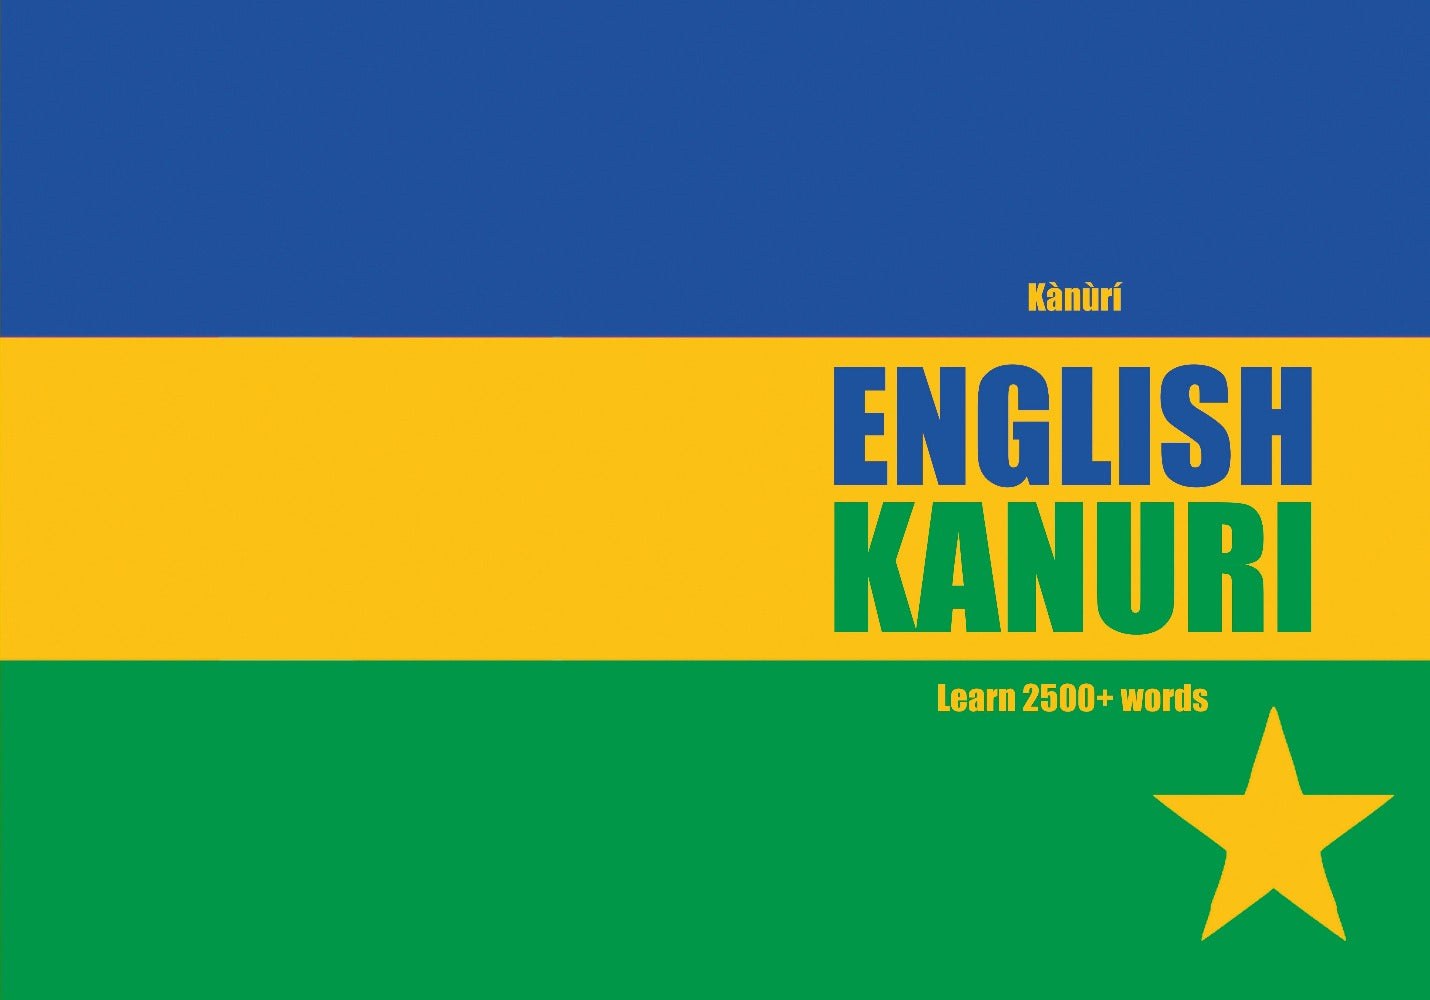 Kanuri language learning notebook cover